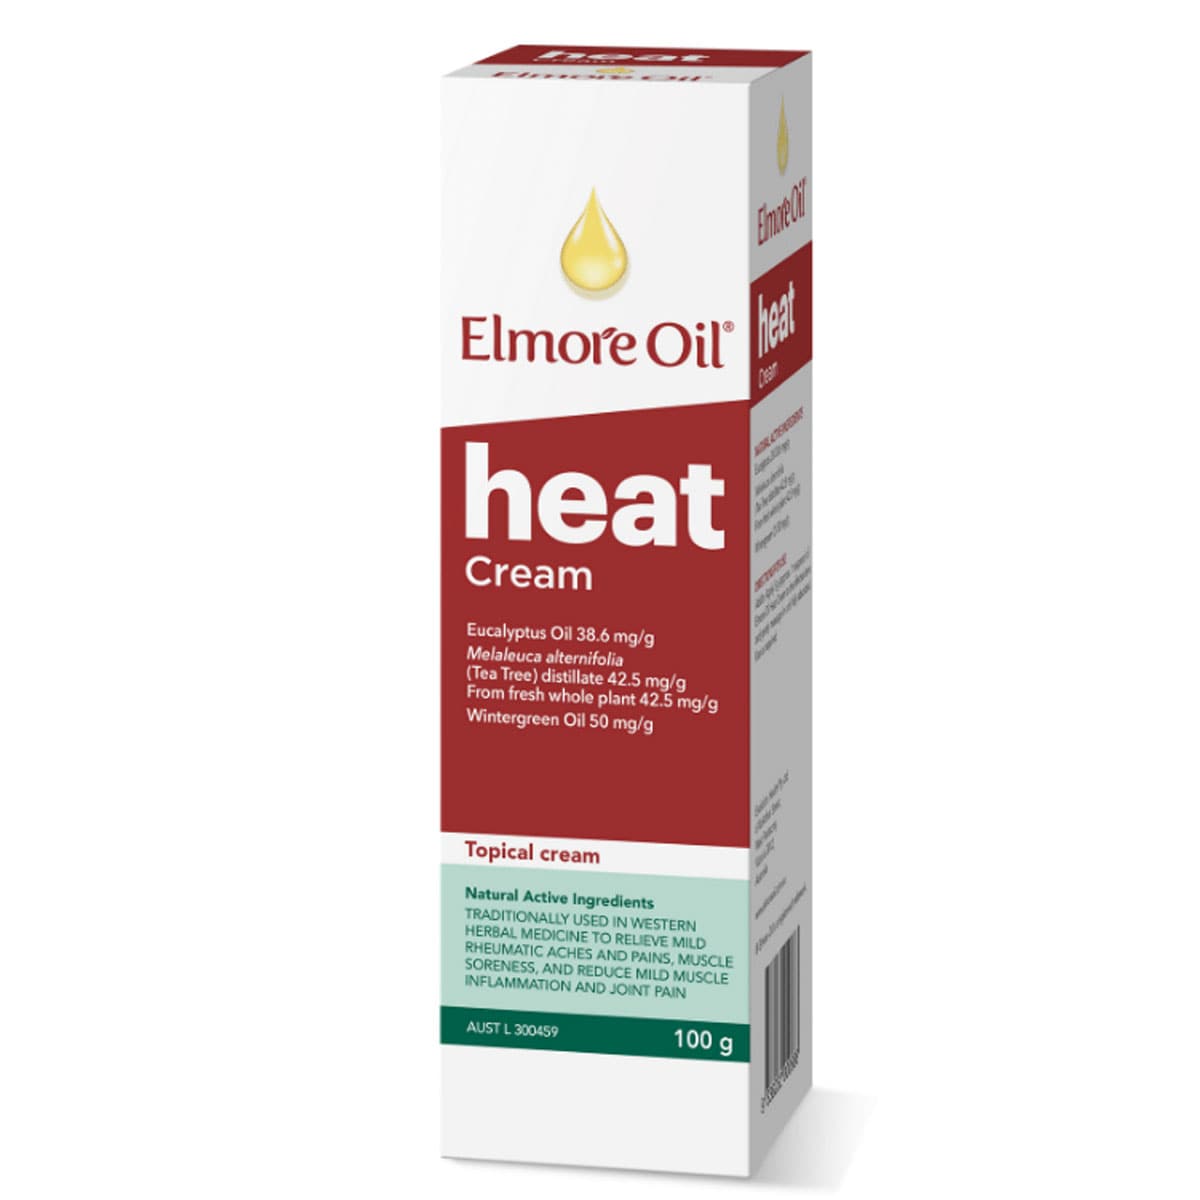 Elmore Oil Heat Cream Muscular Aches & Pain Relief 100g